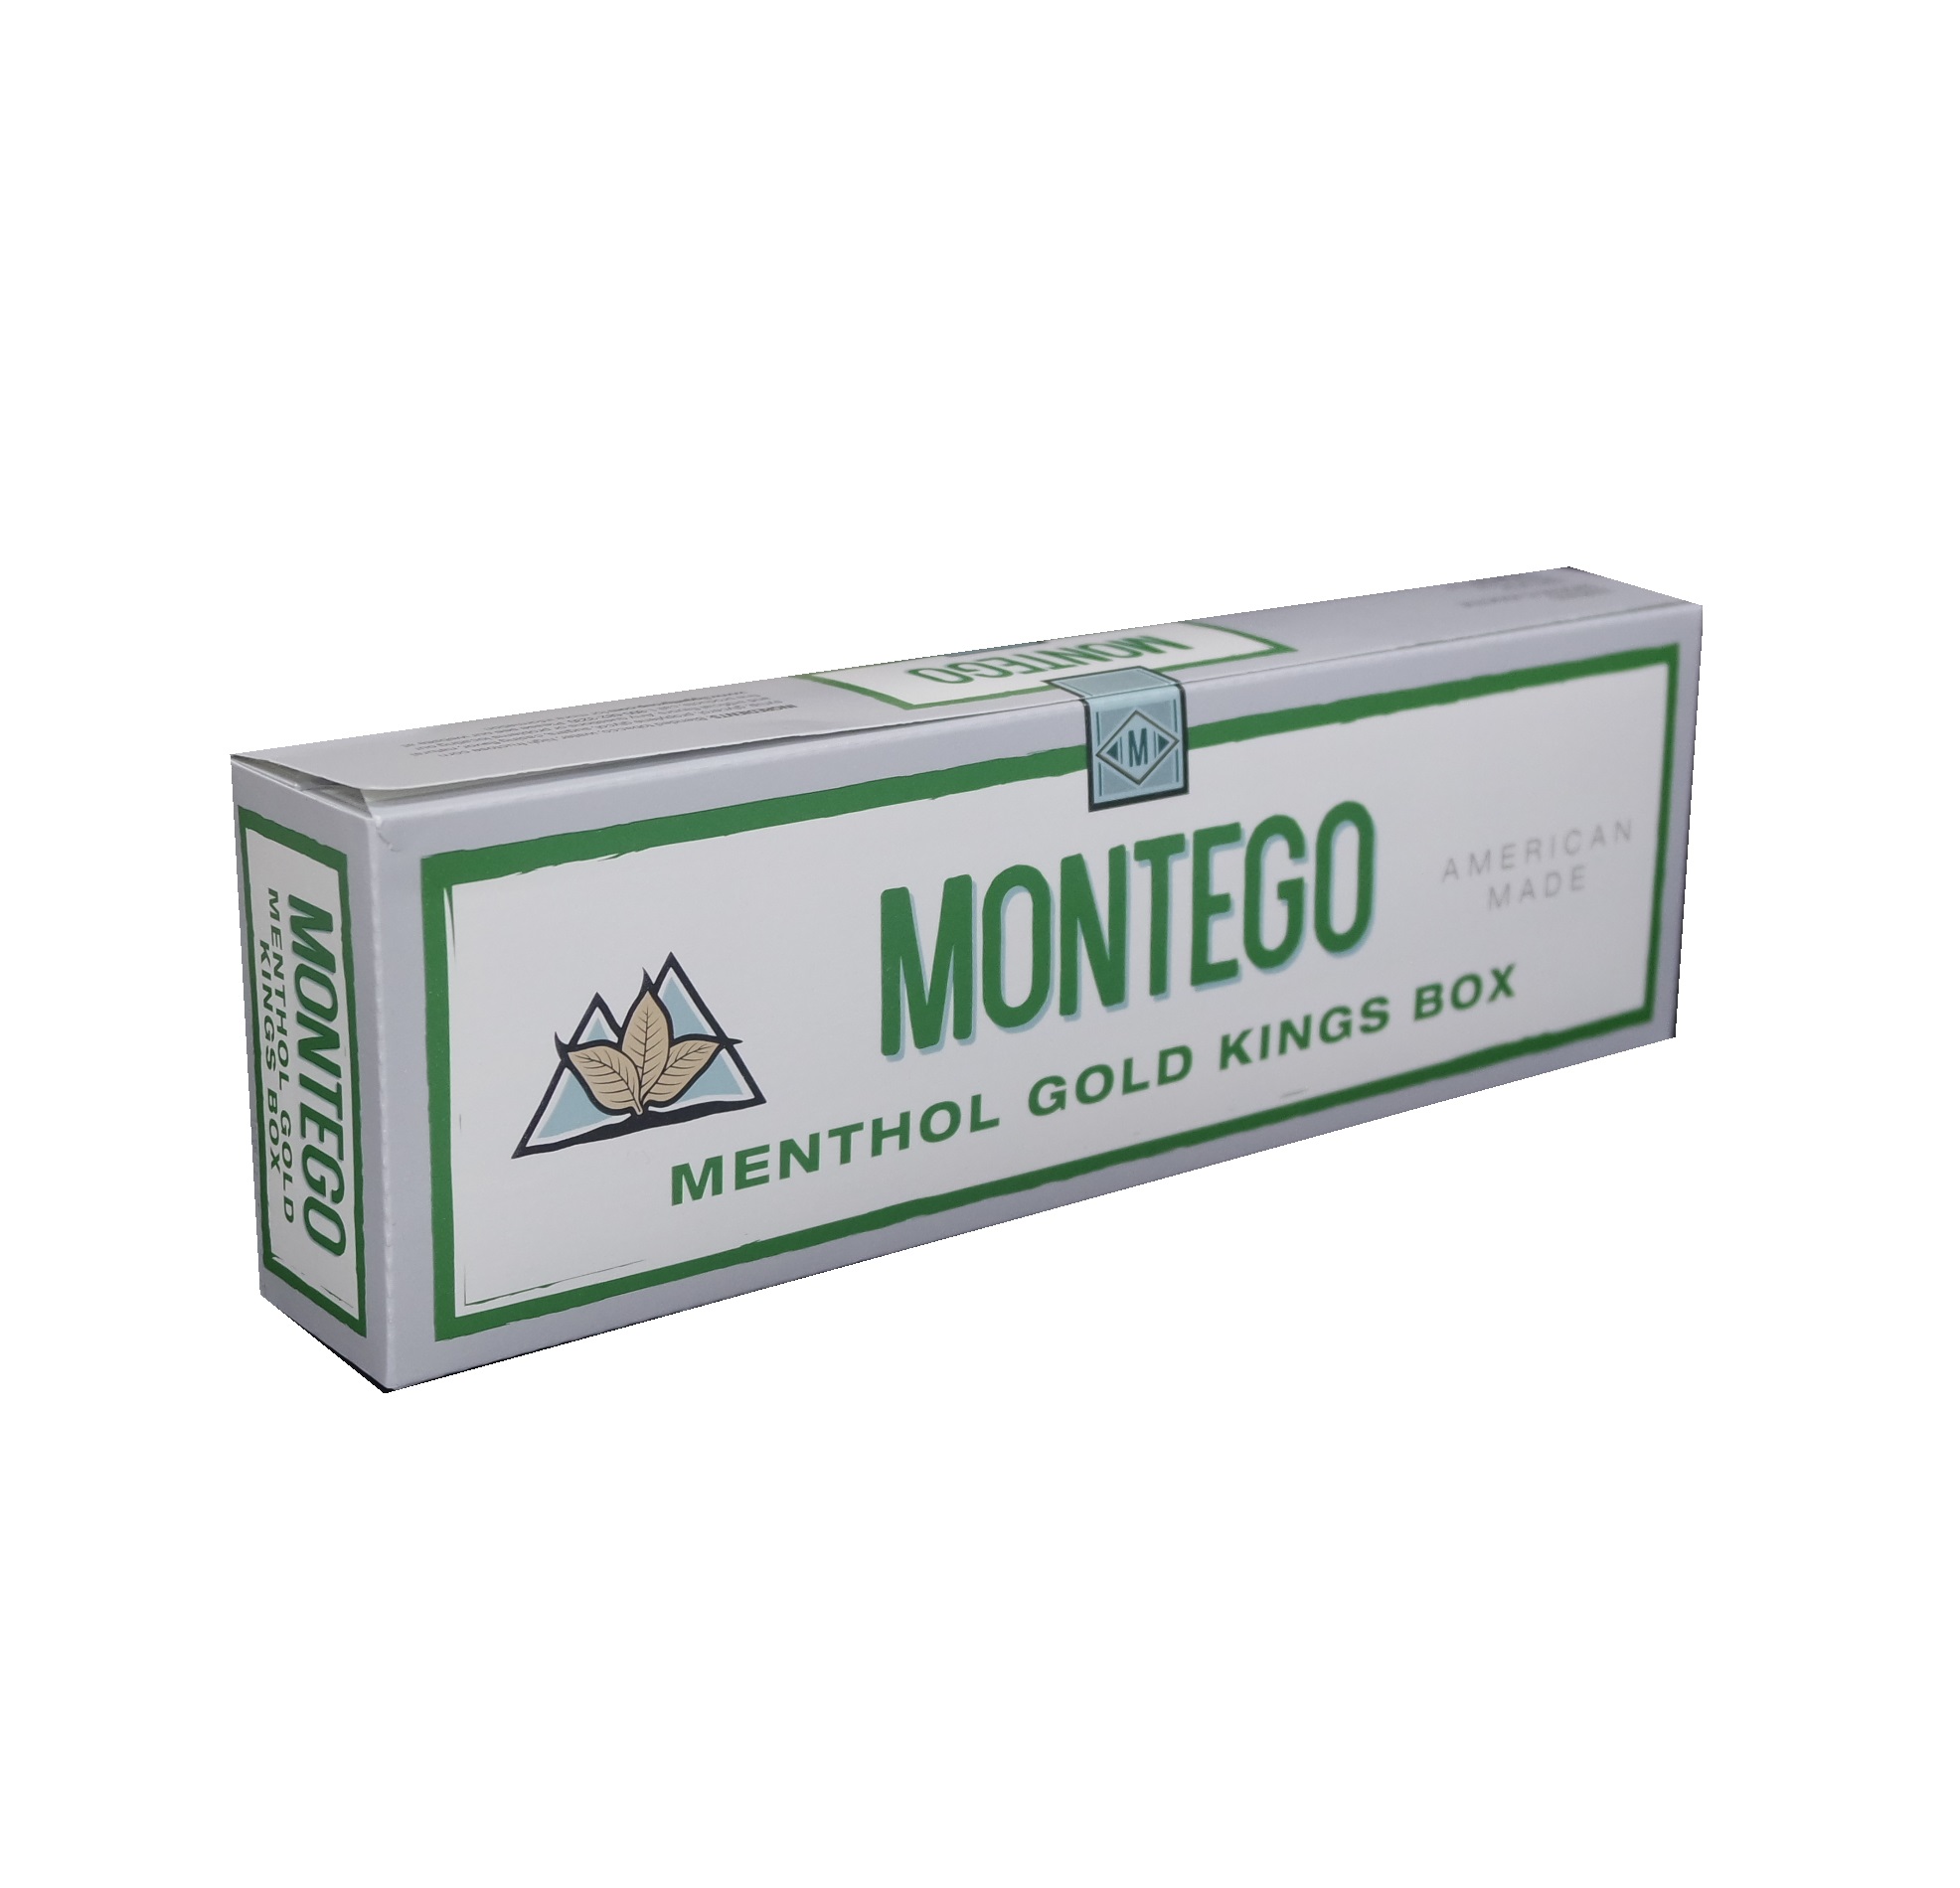 Montego menthol gold king box